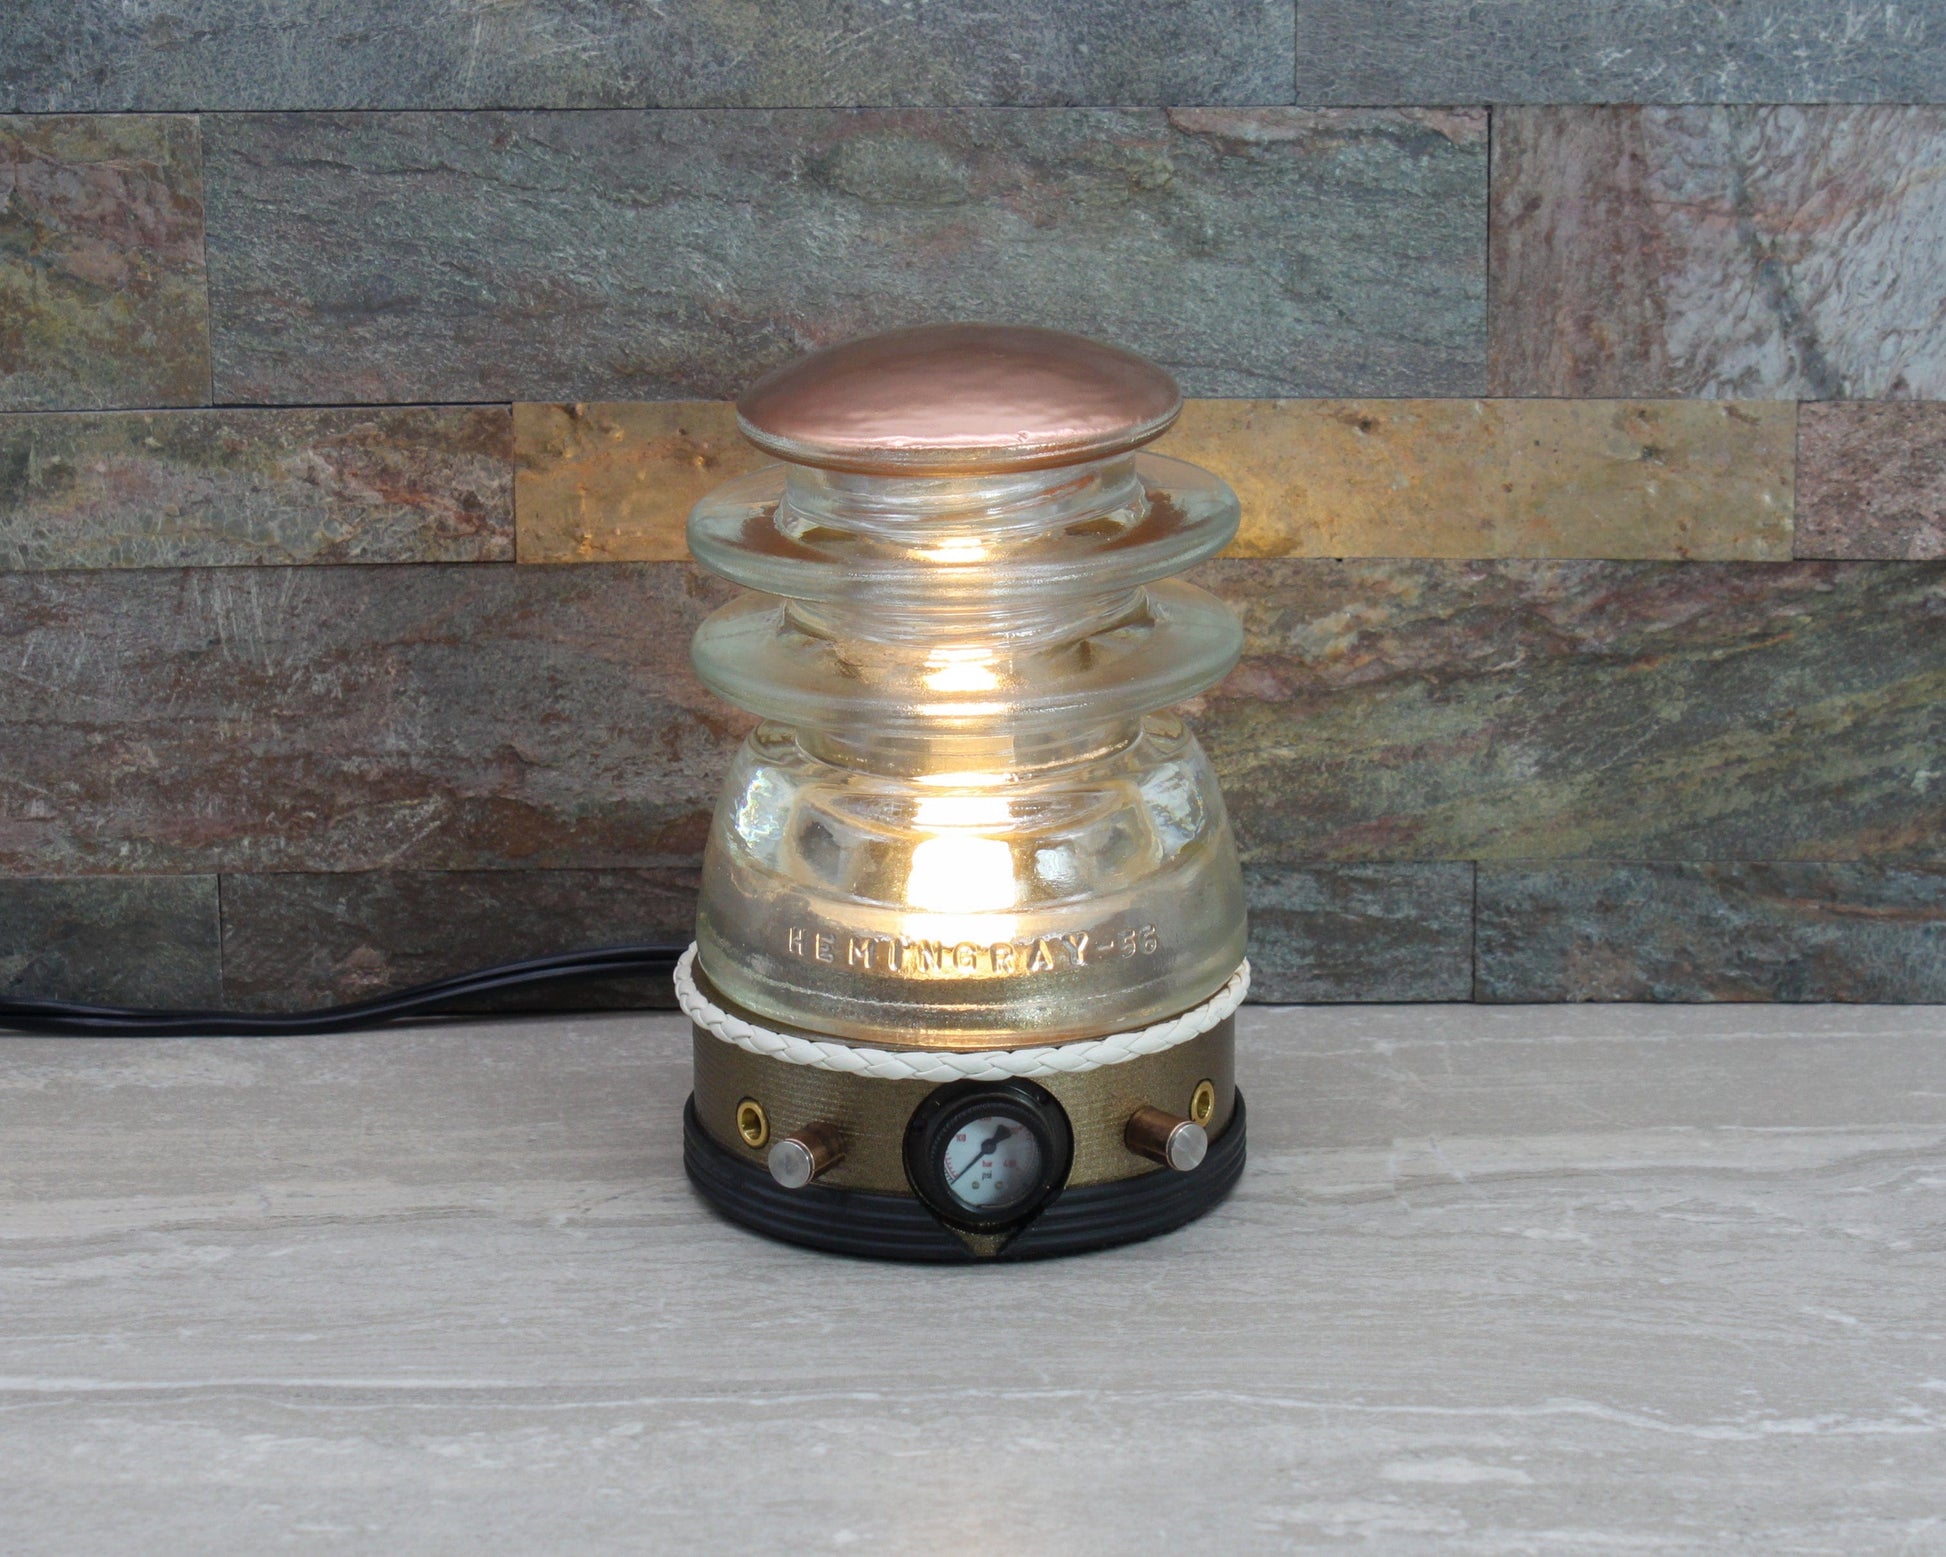 LightAndTimeArt Steampunk Lamp Steampunk Hemingray-56 "Dalek" Insulator Lamp, Industrial Lighting, Man Cave Deco, Neo Victorian Lamp design, Cyberpunk Lamp